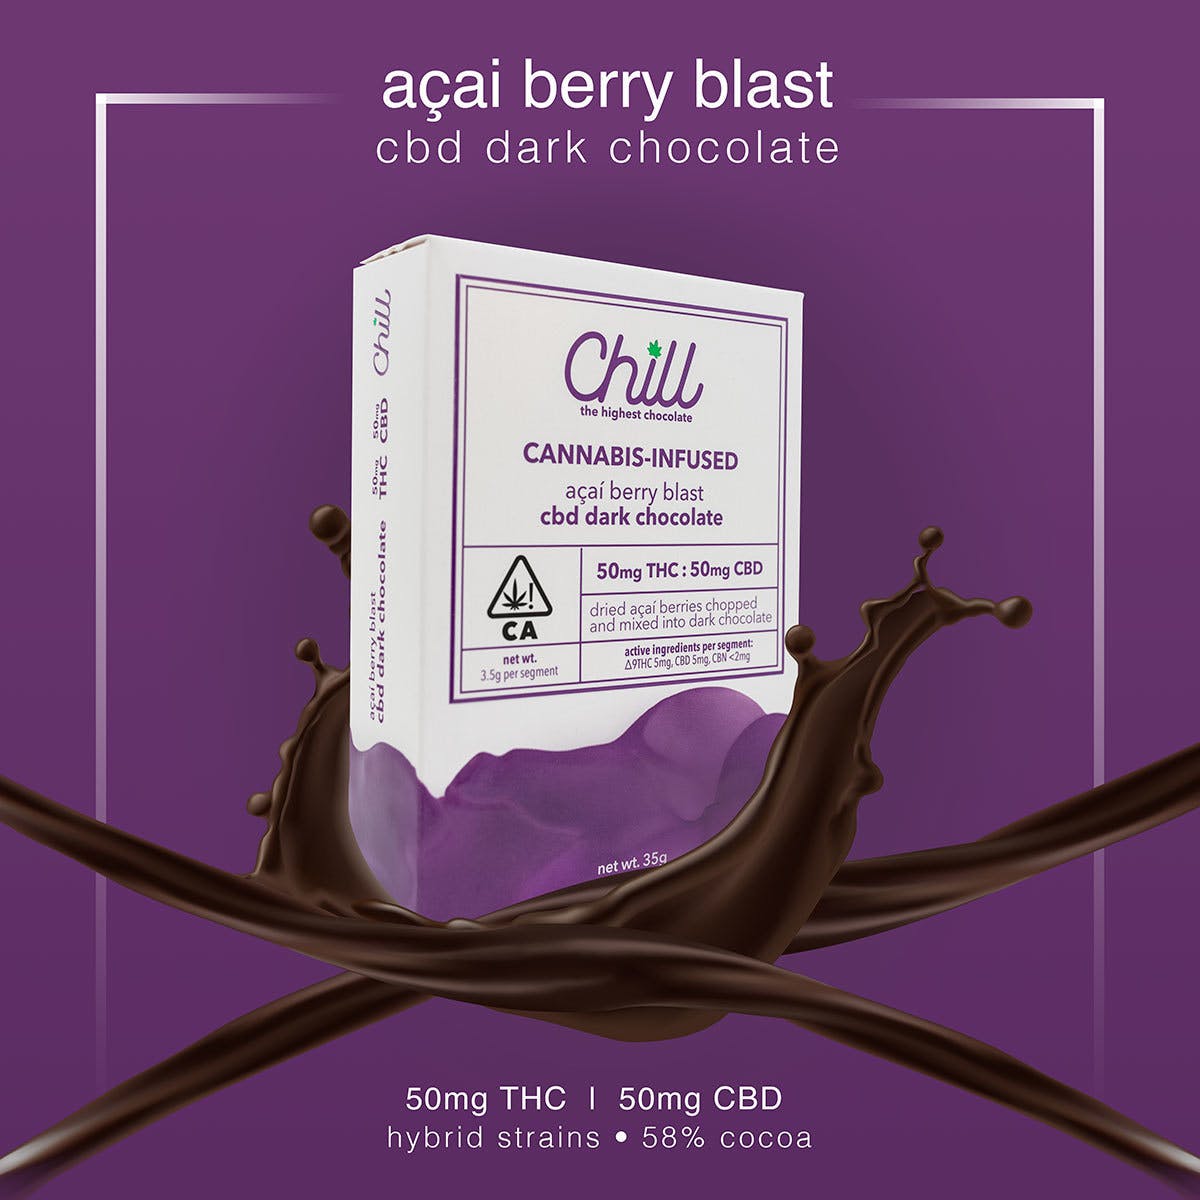 edible-chill-cannabis-infused-acai-berry-blast-cbd-dark-chocolate